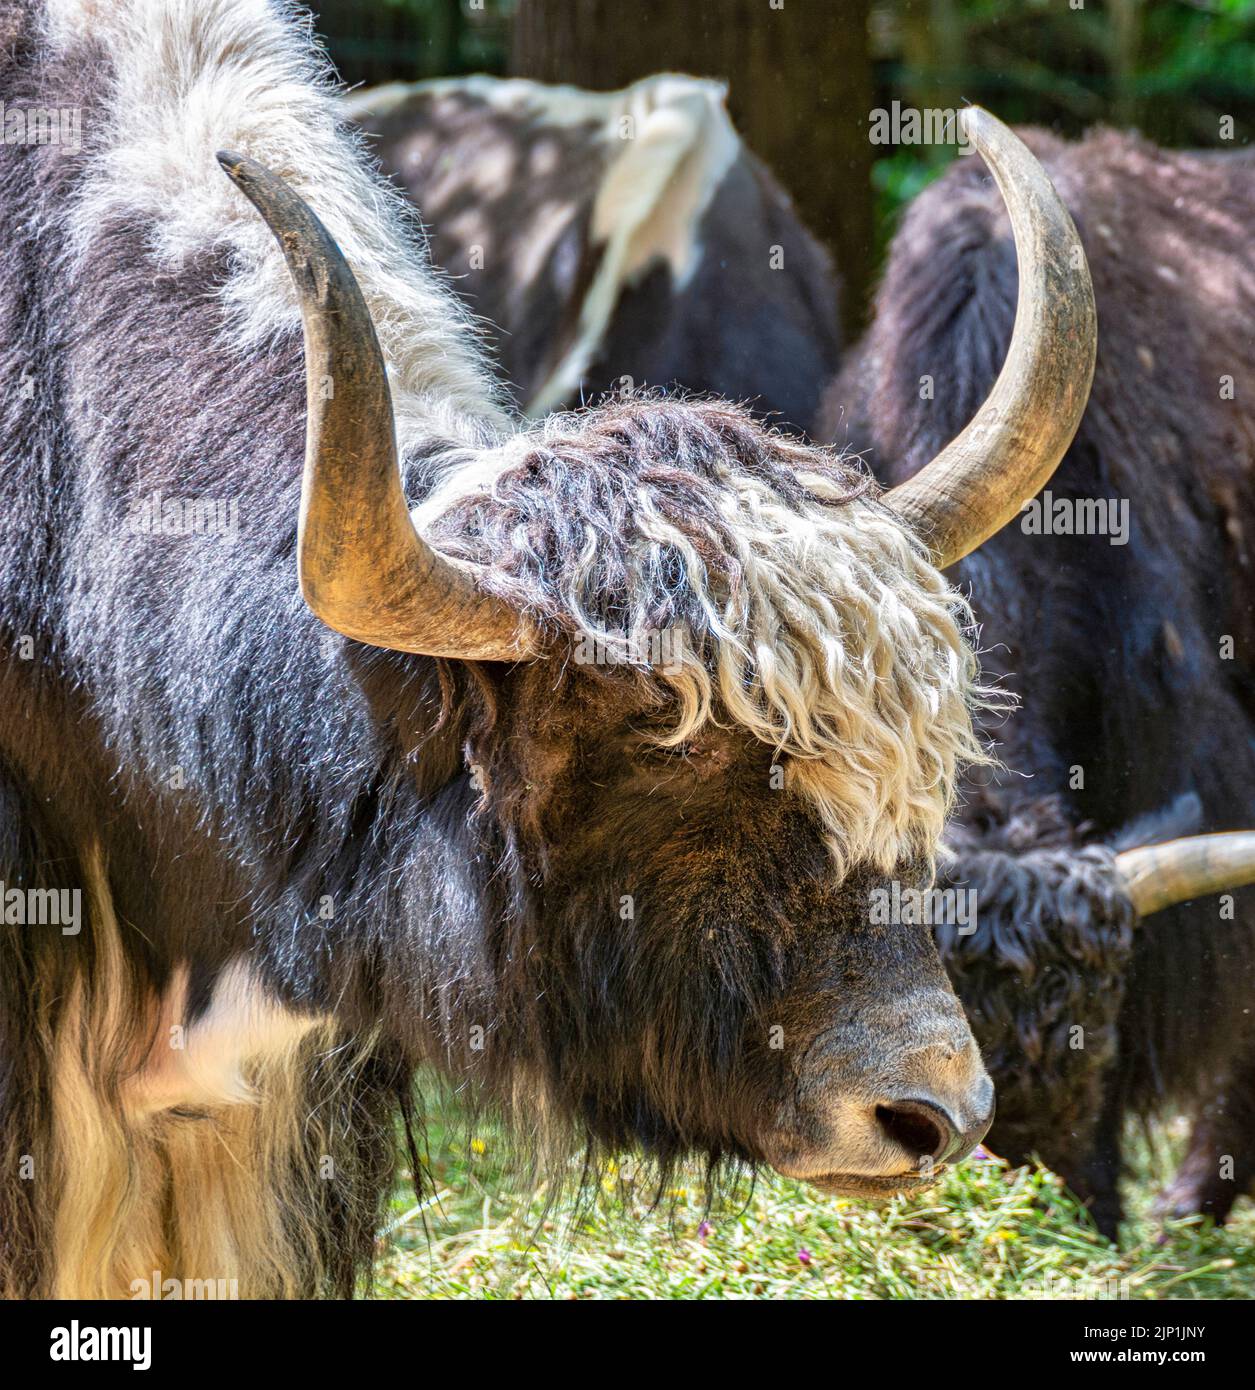 yak, bos mutus, yaks Foto Stock